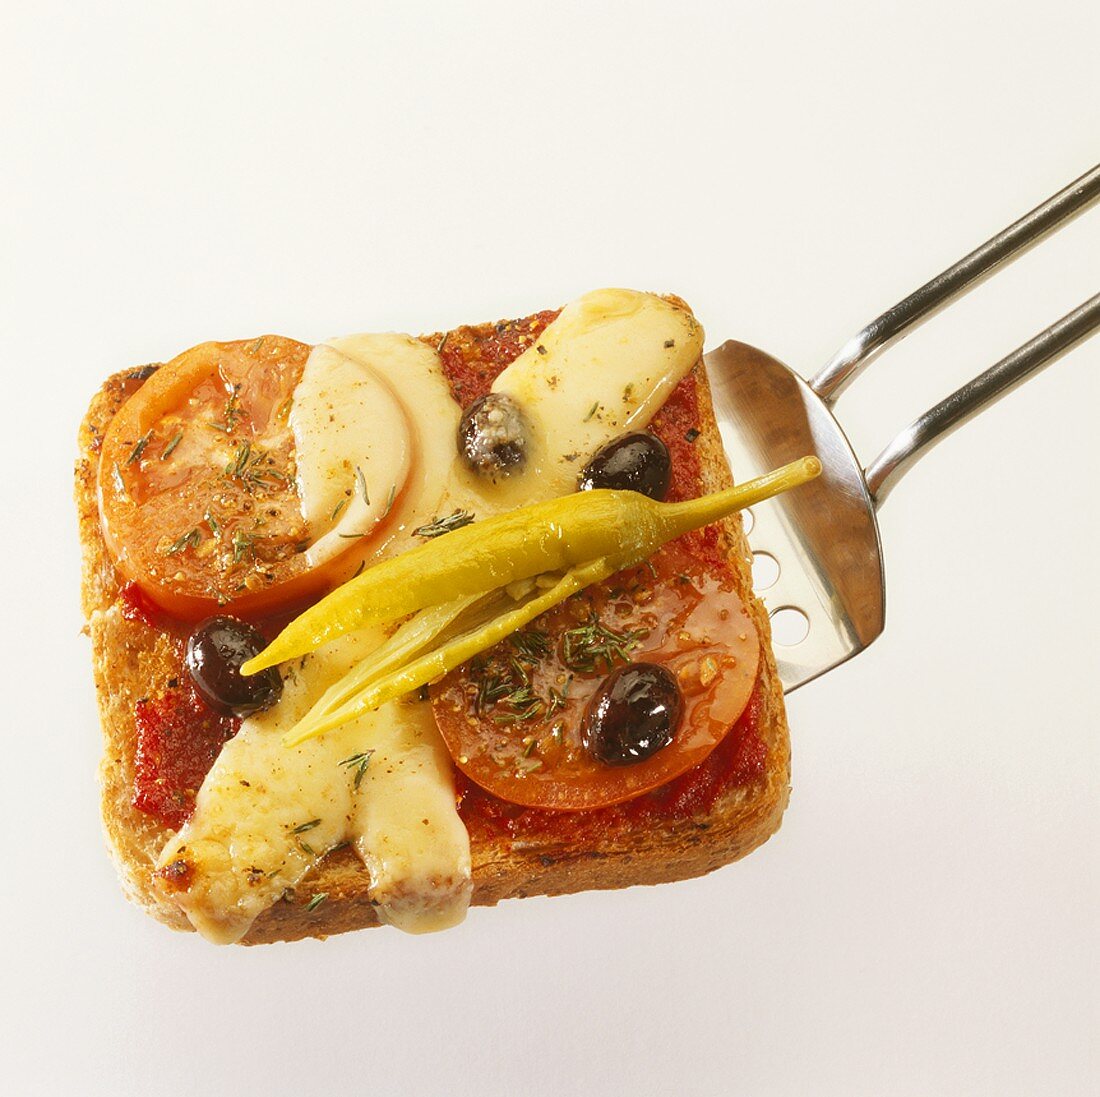 Toastscheibe mit Peperoni, Tomate und Käse überbacken